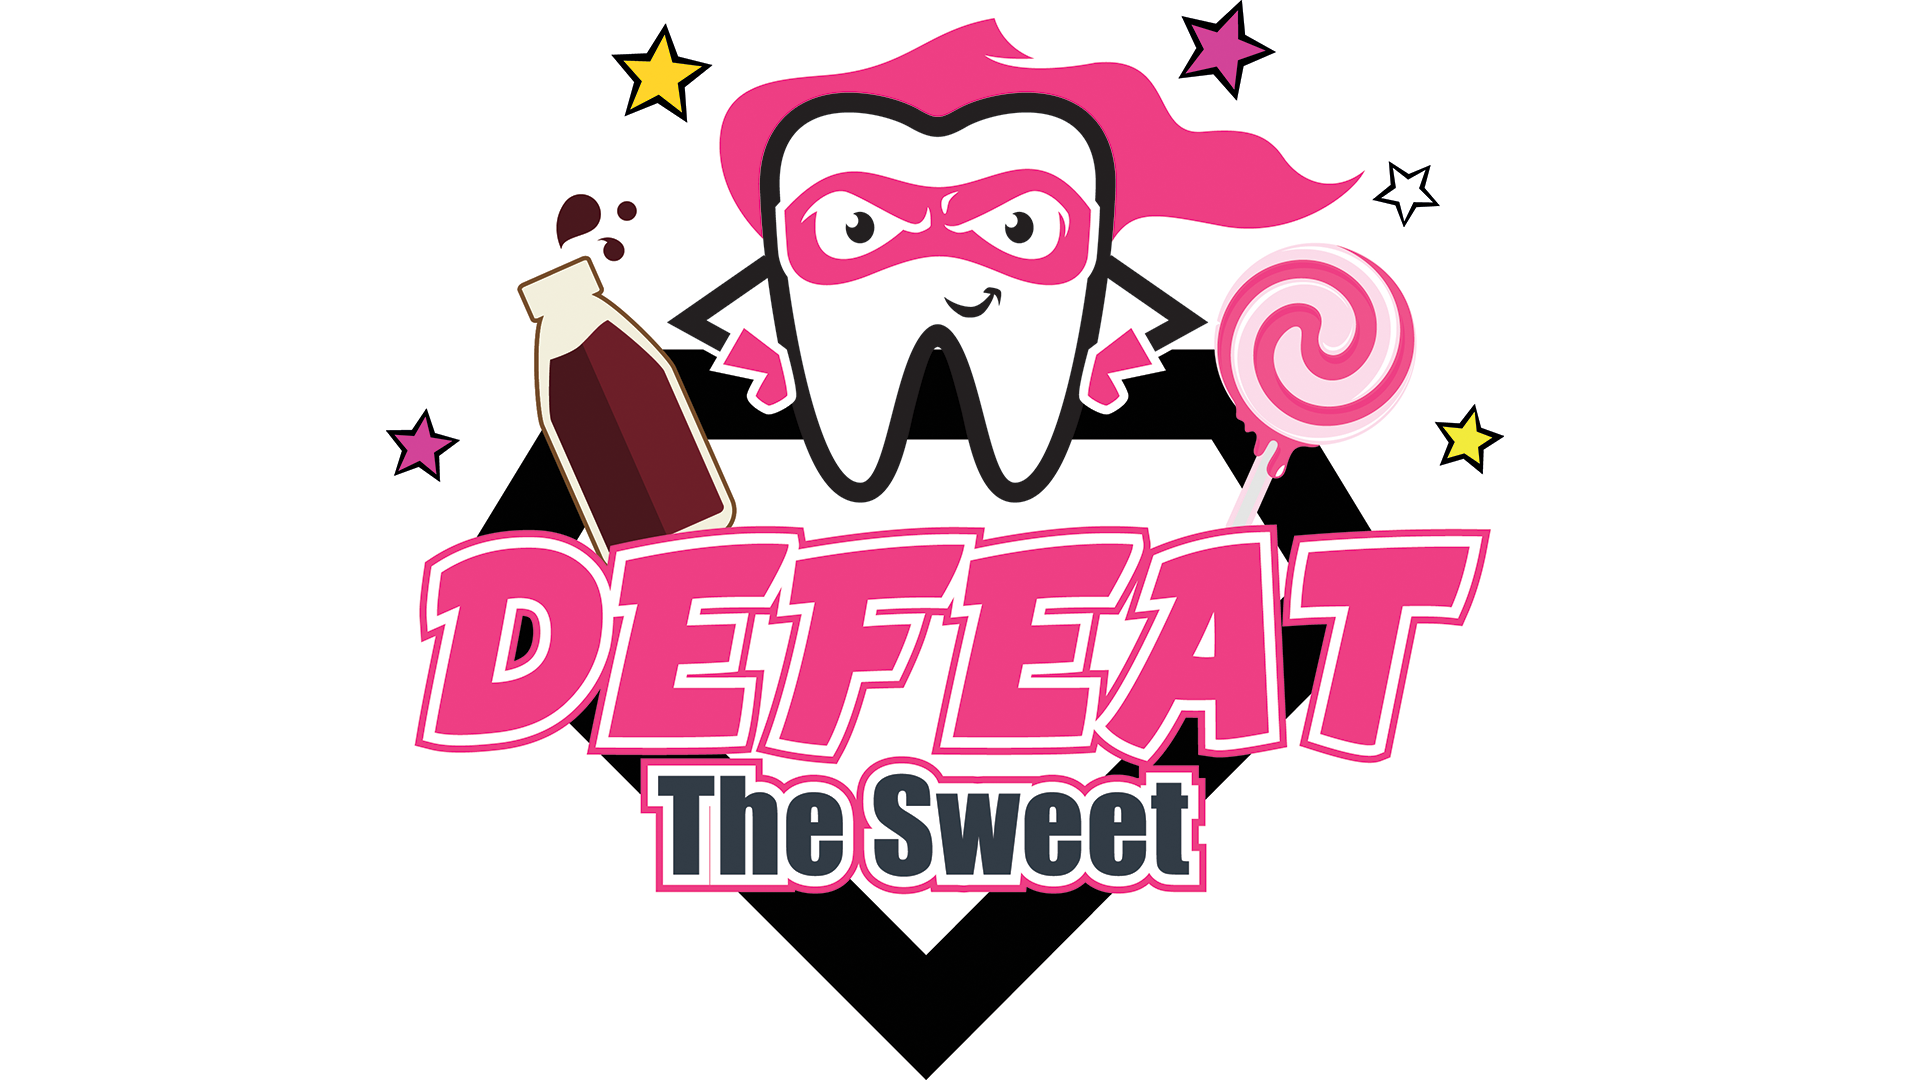 Defeat the sweet logo